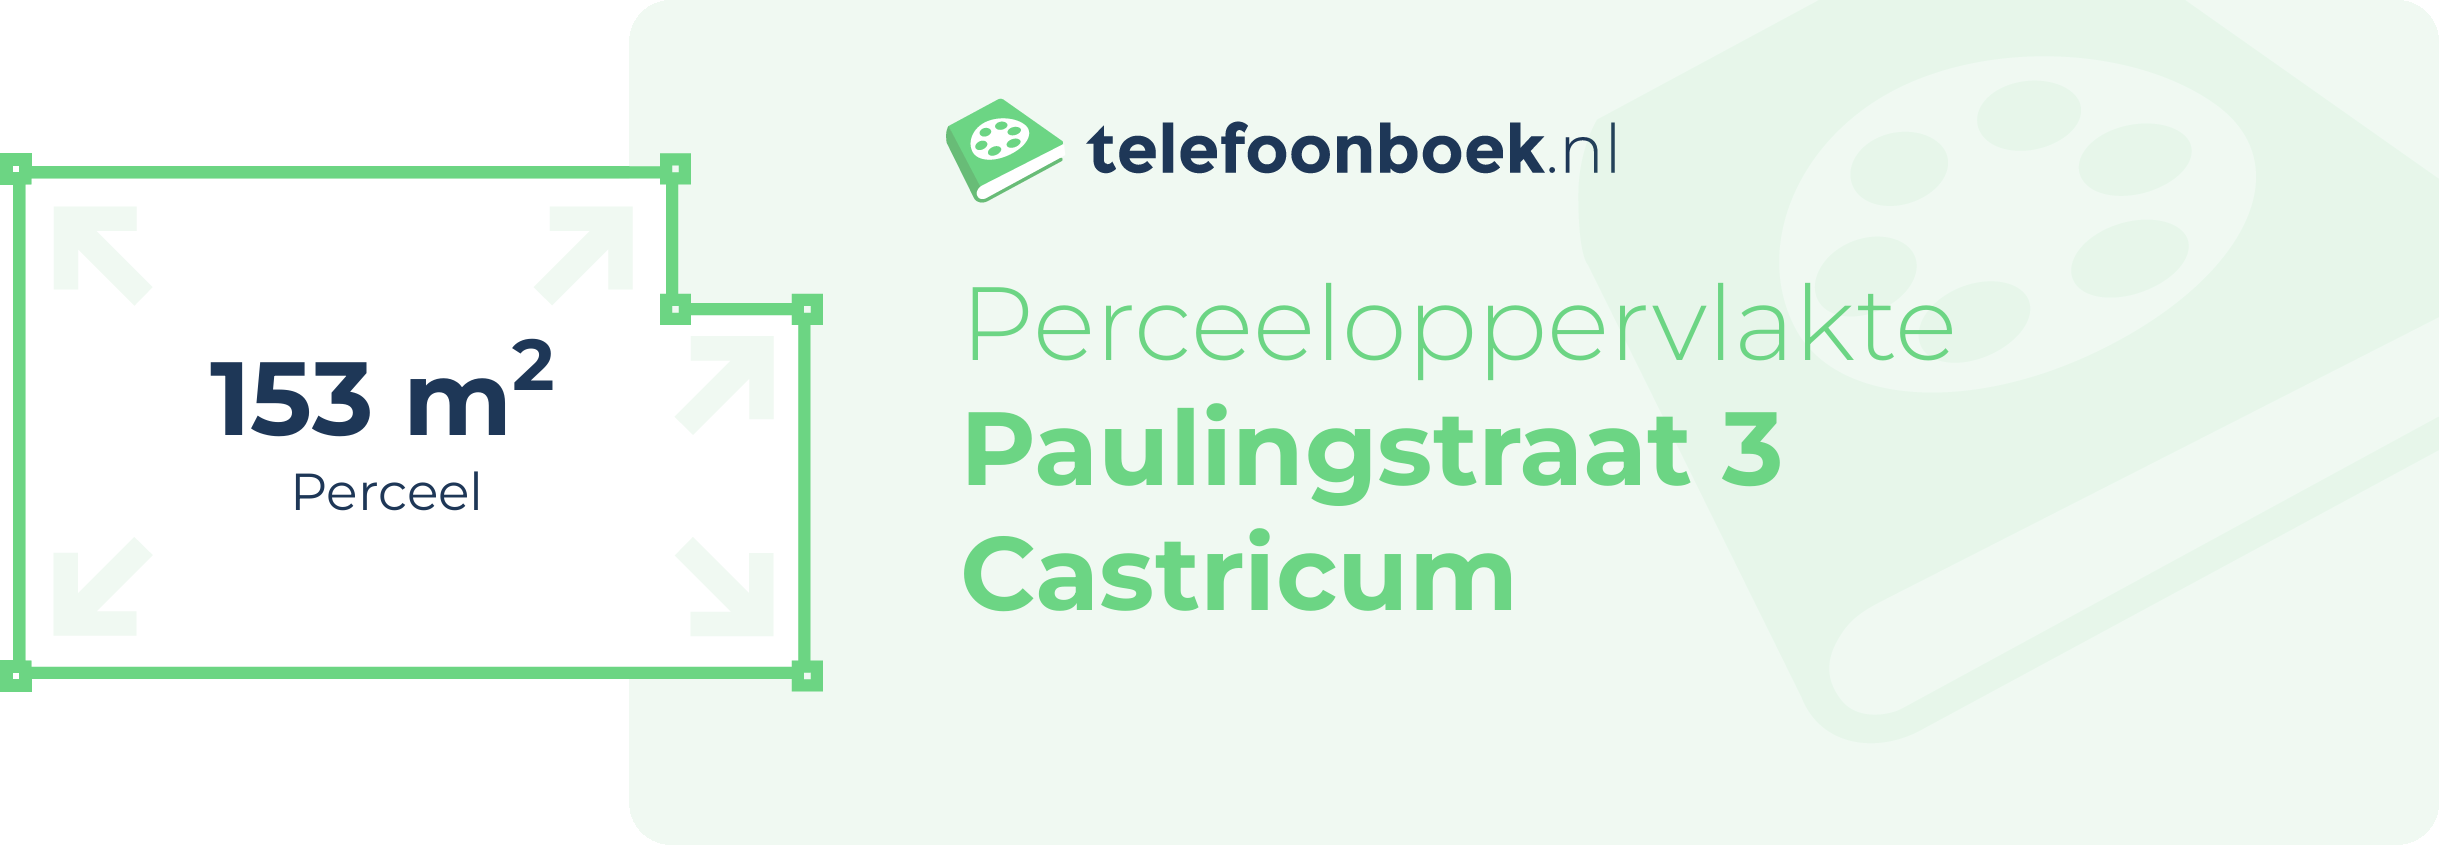 Perceeloppervlakte Paulingstraat 3 Castricum